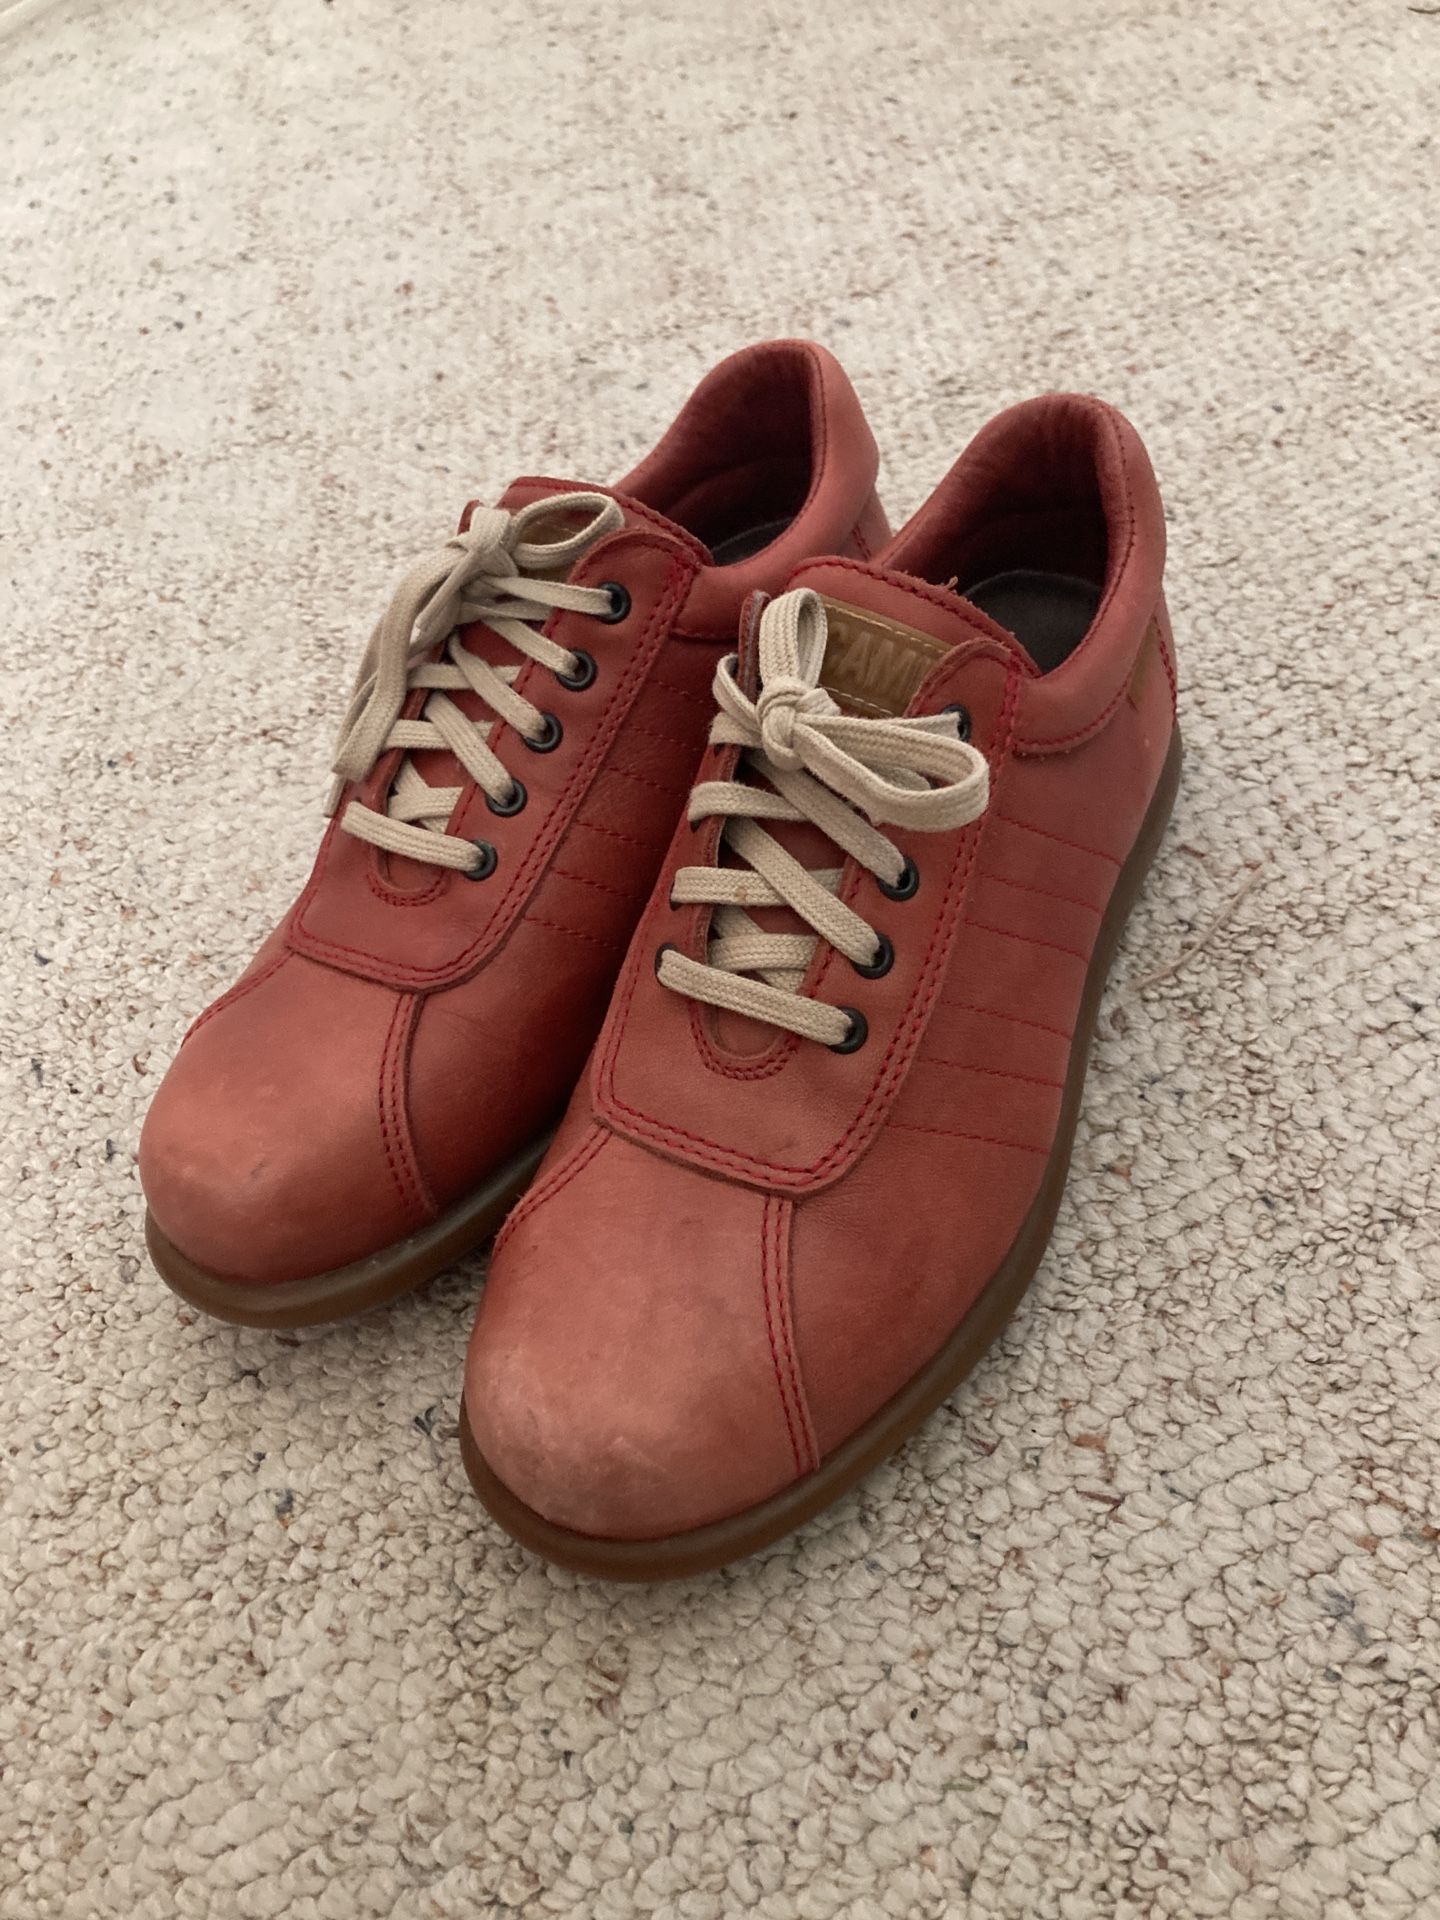 Camper Pelotas (Red Leather Oxford Sneaker For Men) 